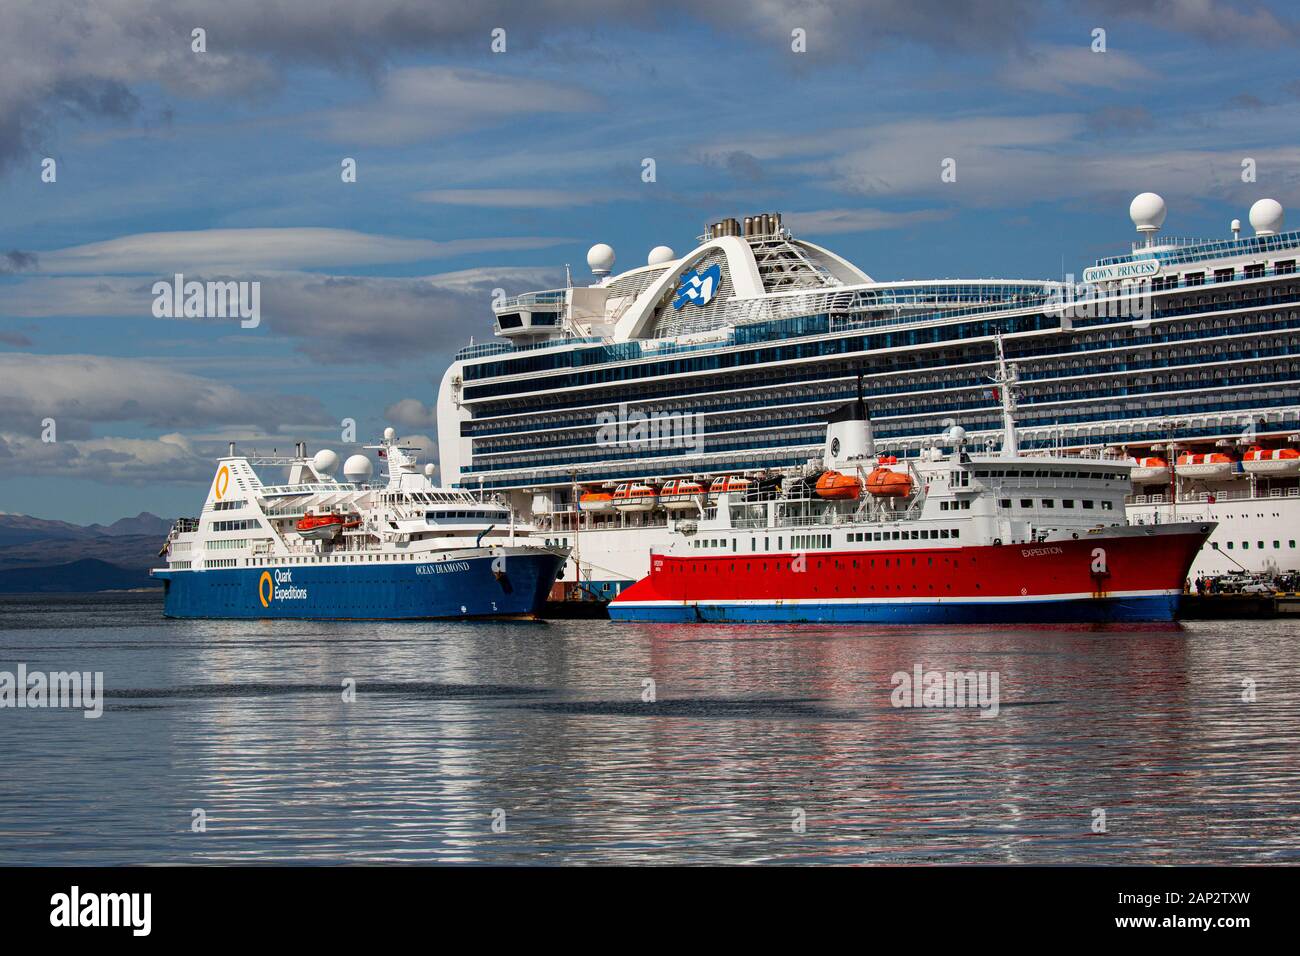 view of a cruise ship in the port of Ushuaia the capital of Tierra del Fuego, Antartida e Islas del Atlantico Sur Province, Argentina. Stock Photo